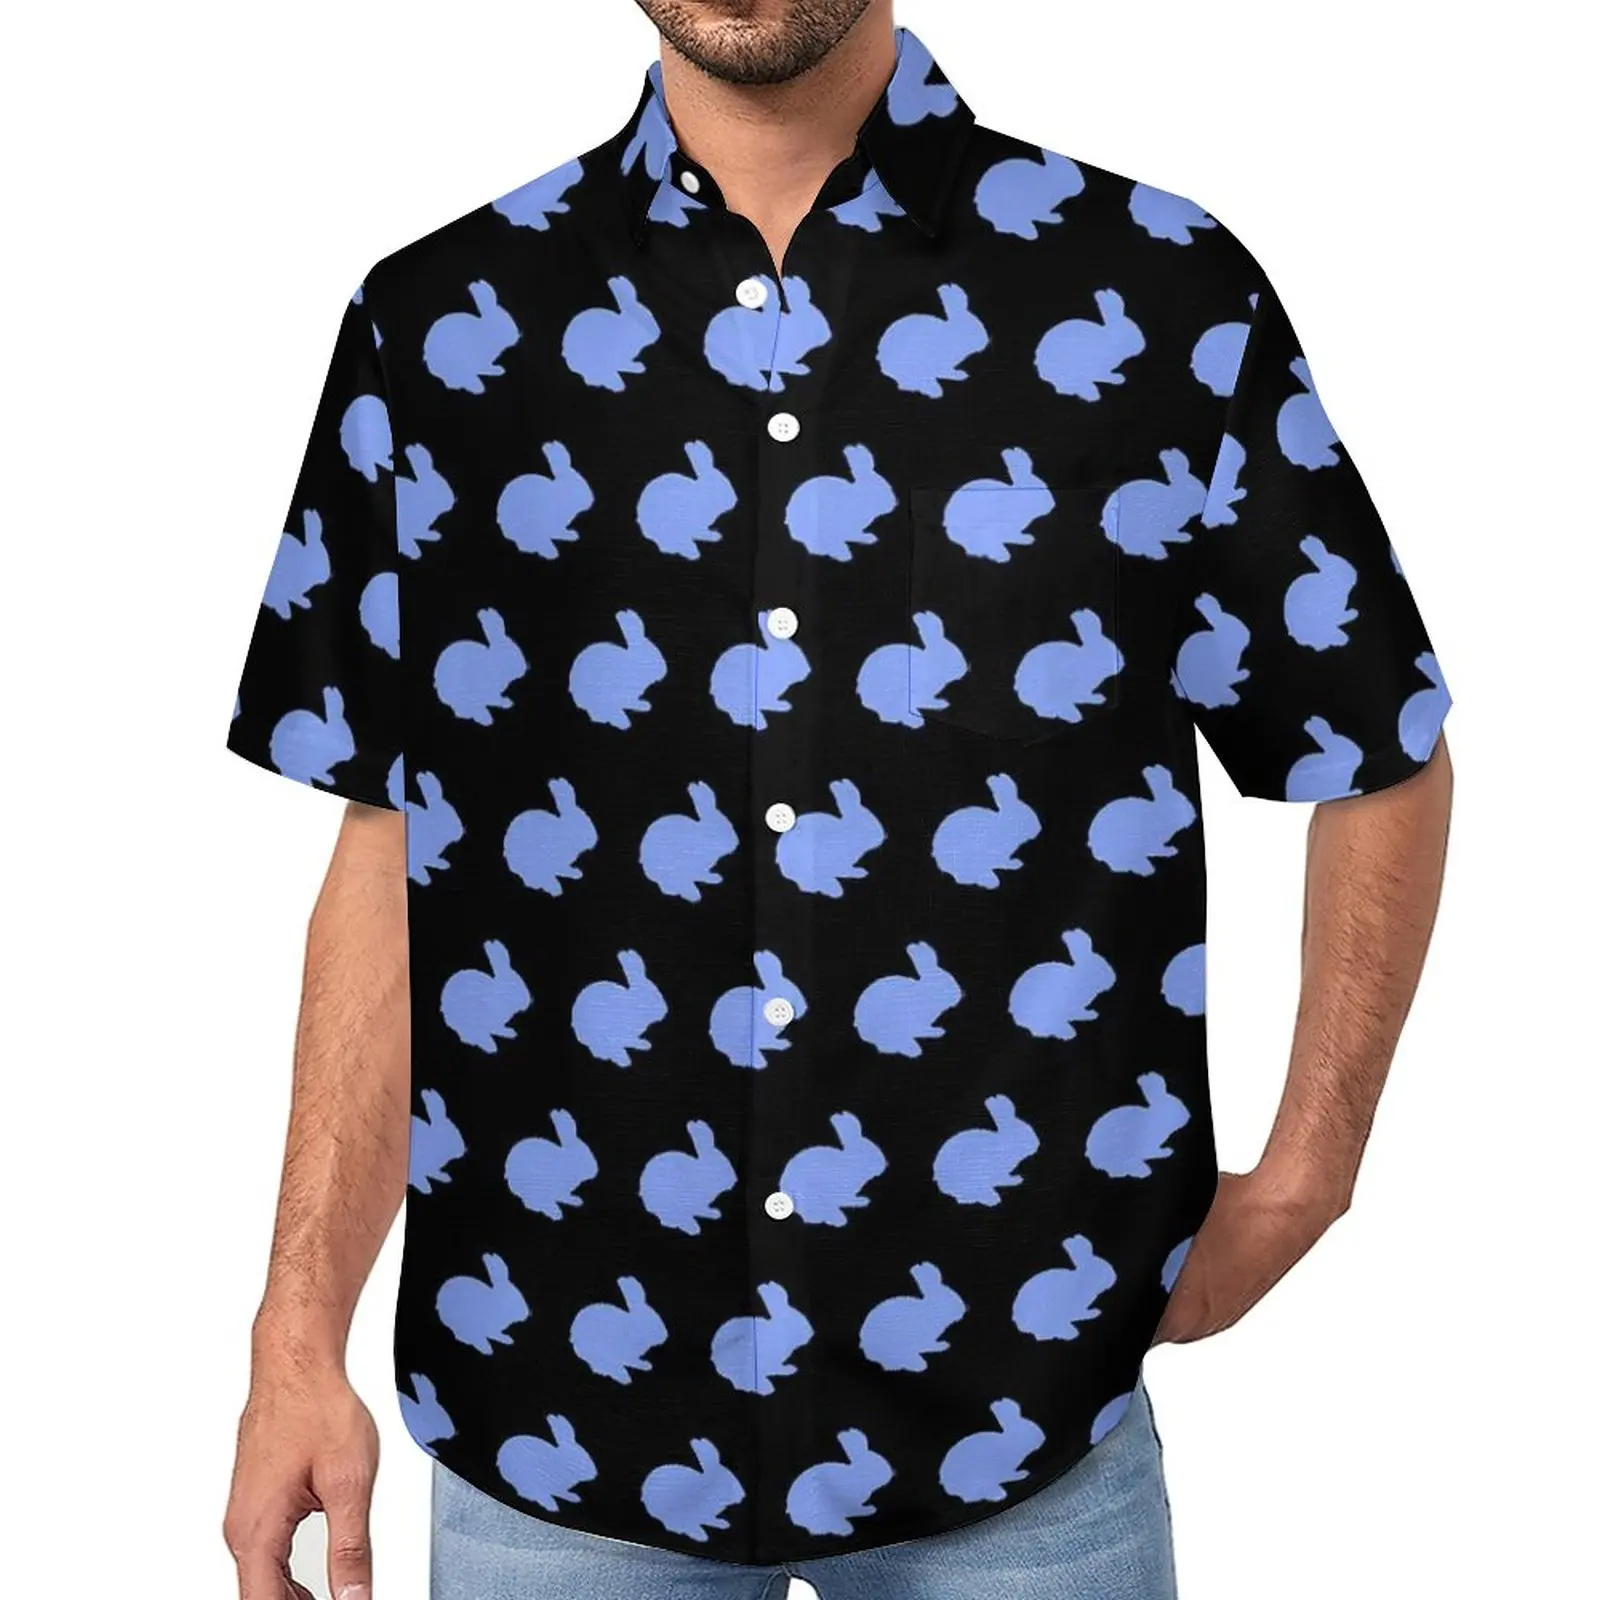 

Bunny Rabbit Loose Shirt Men Vacation Blue Polka Dot Casual Shirts Summer Graphic Short Sleeves Cool Oversize Blouses